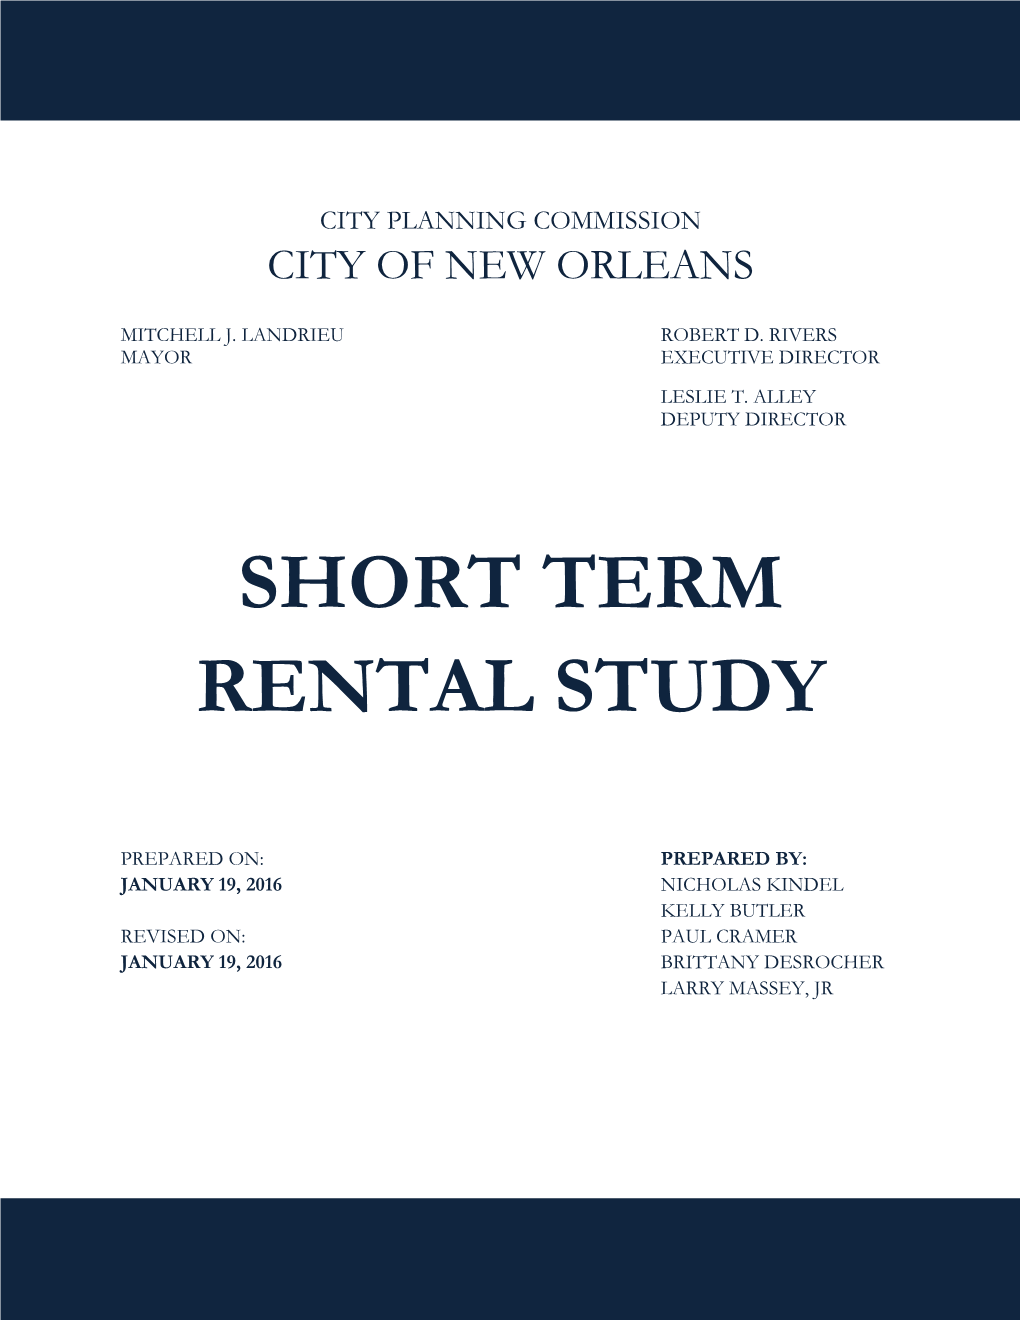 Short Term Rental Study